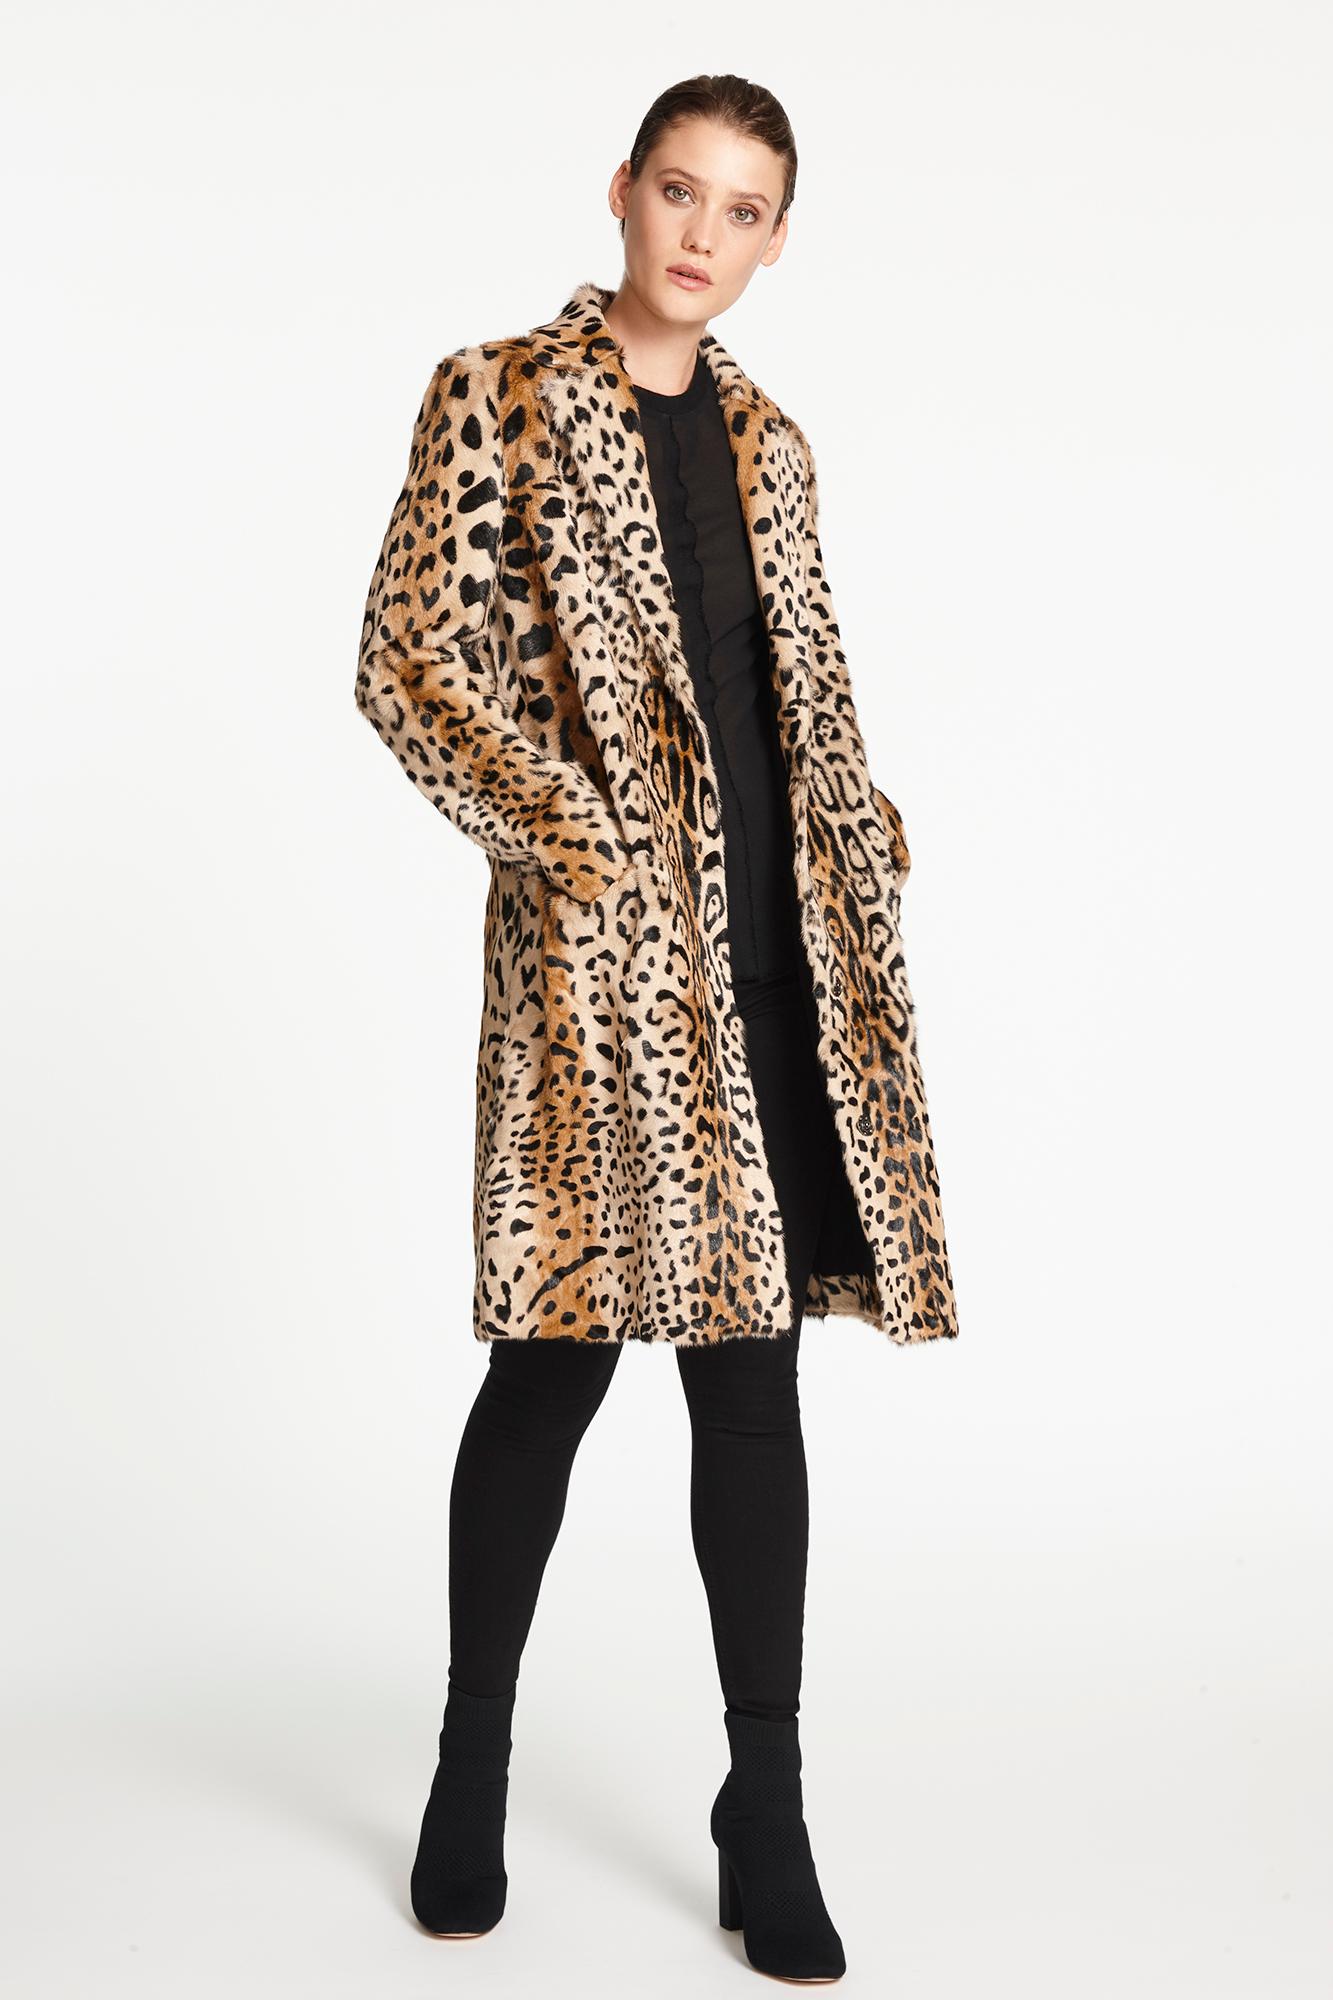 Verheyen London Leopard Print Coat in Red Ruby Goat Hair Fur UK 12  - Brand New  1